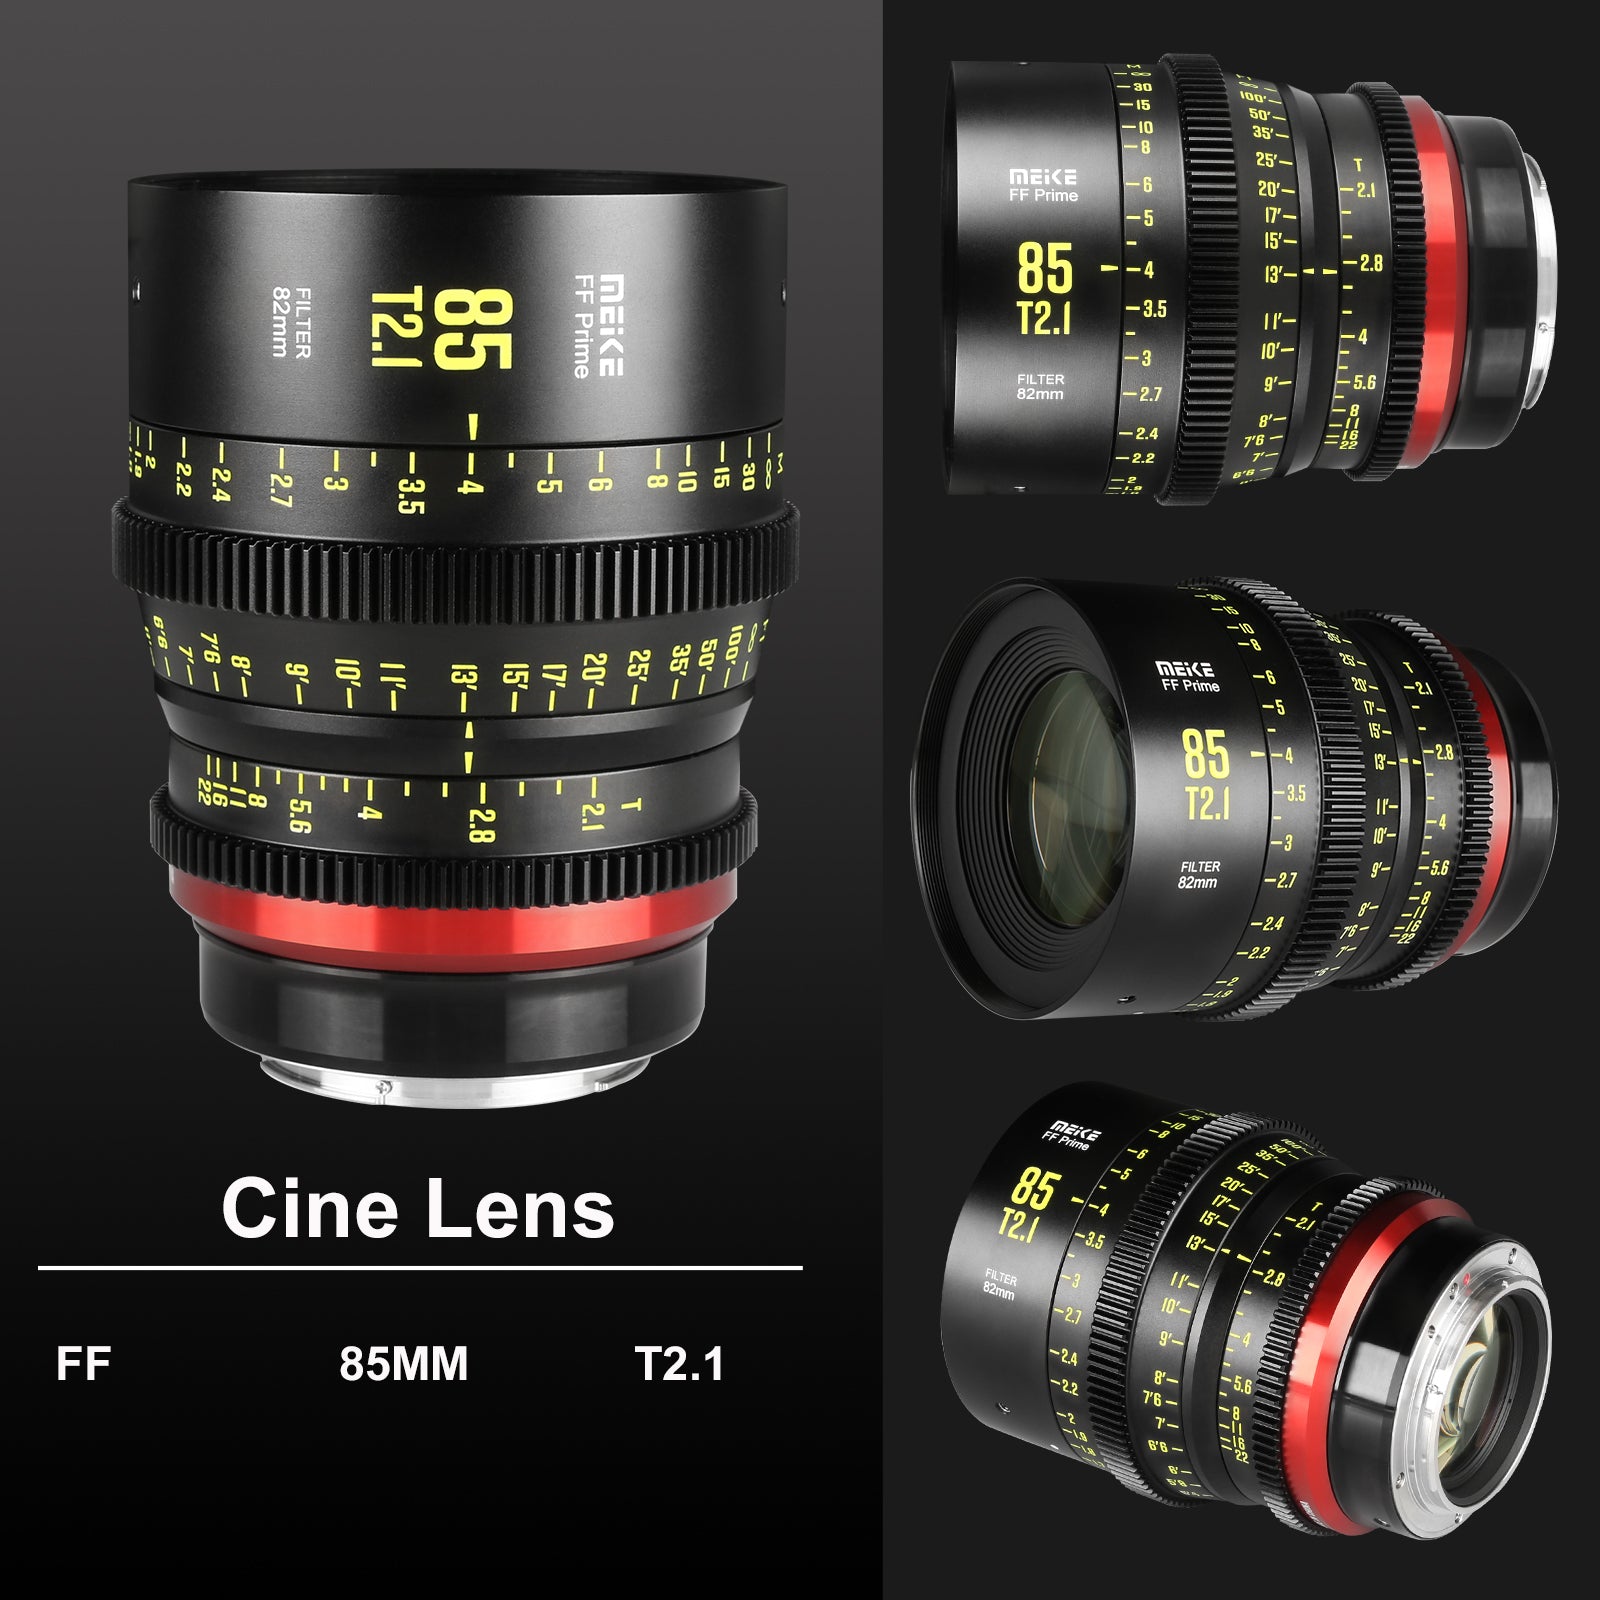 Meike Cinema Full Frame Cinema Prime 85mm T2.1 Lens (Sony E Mount) in Different Perspectives